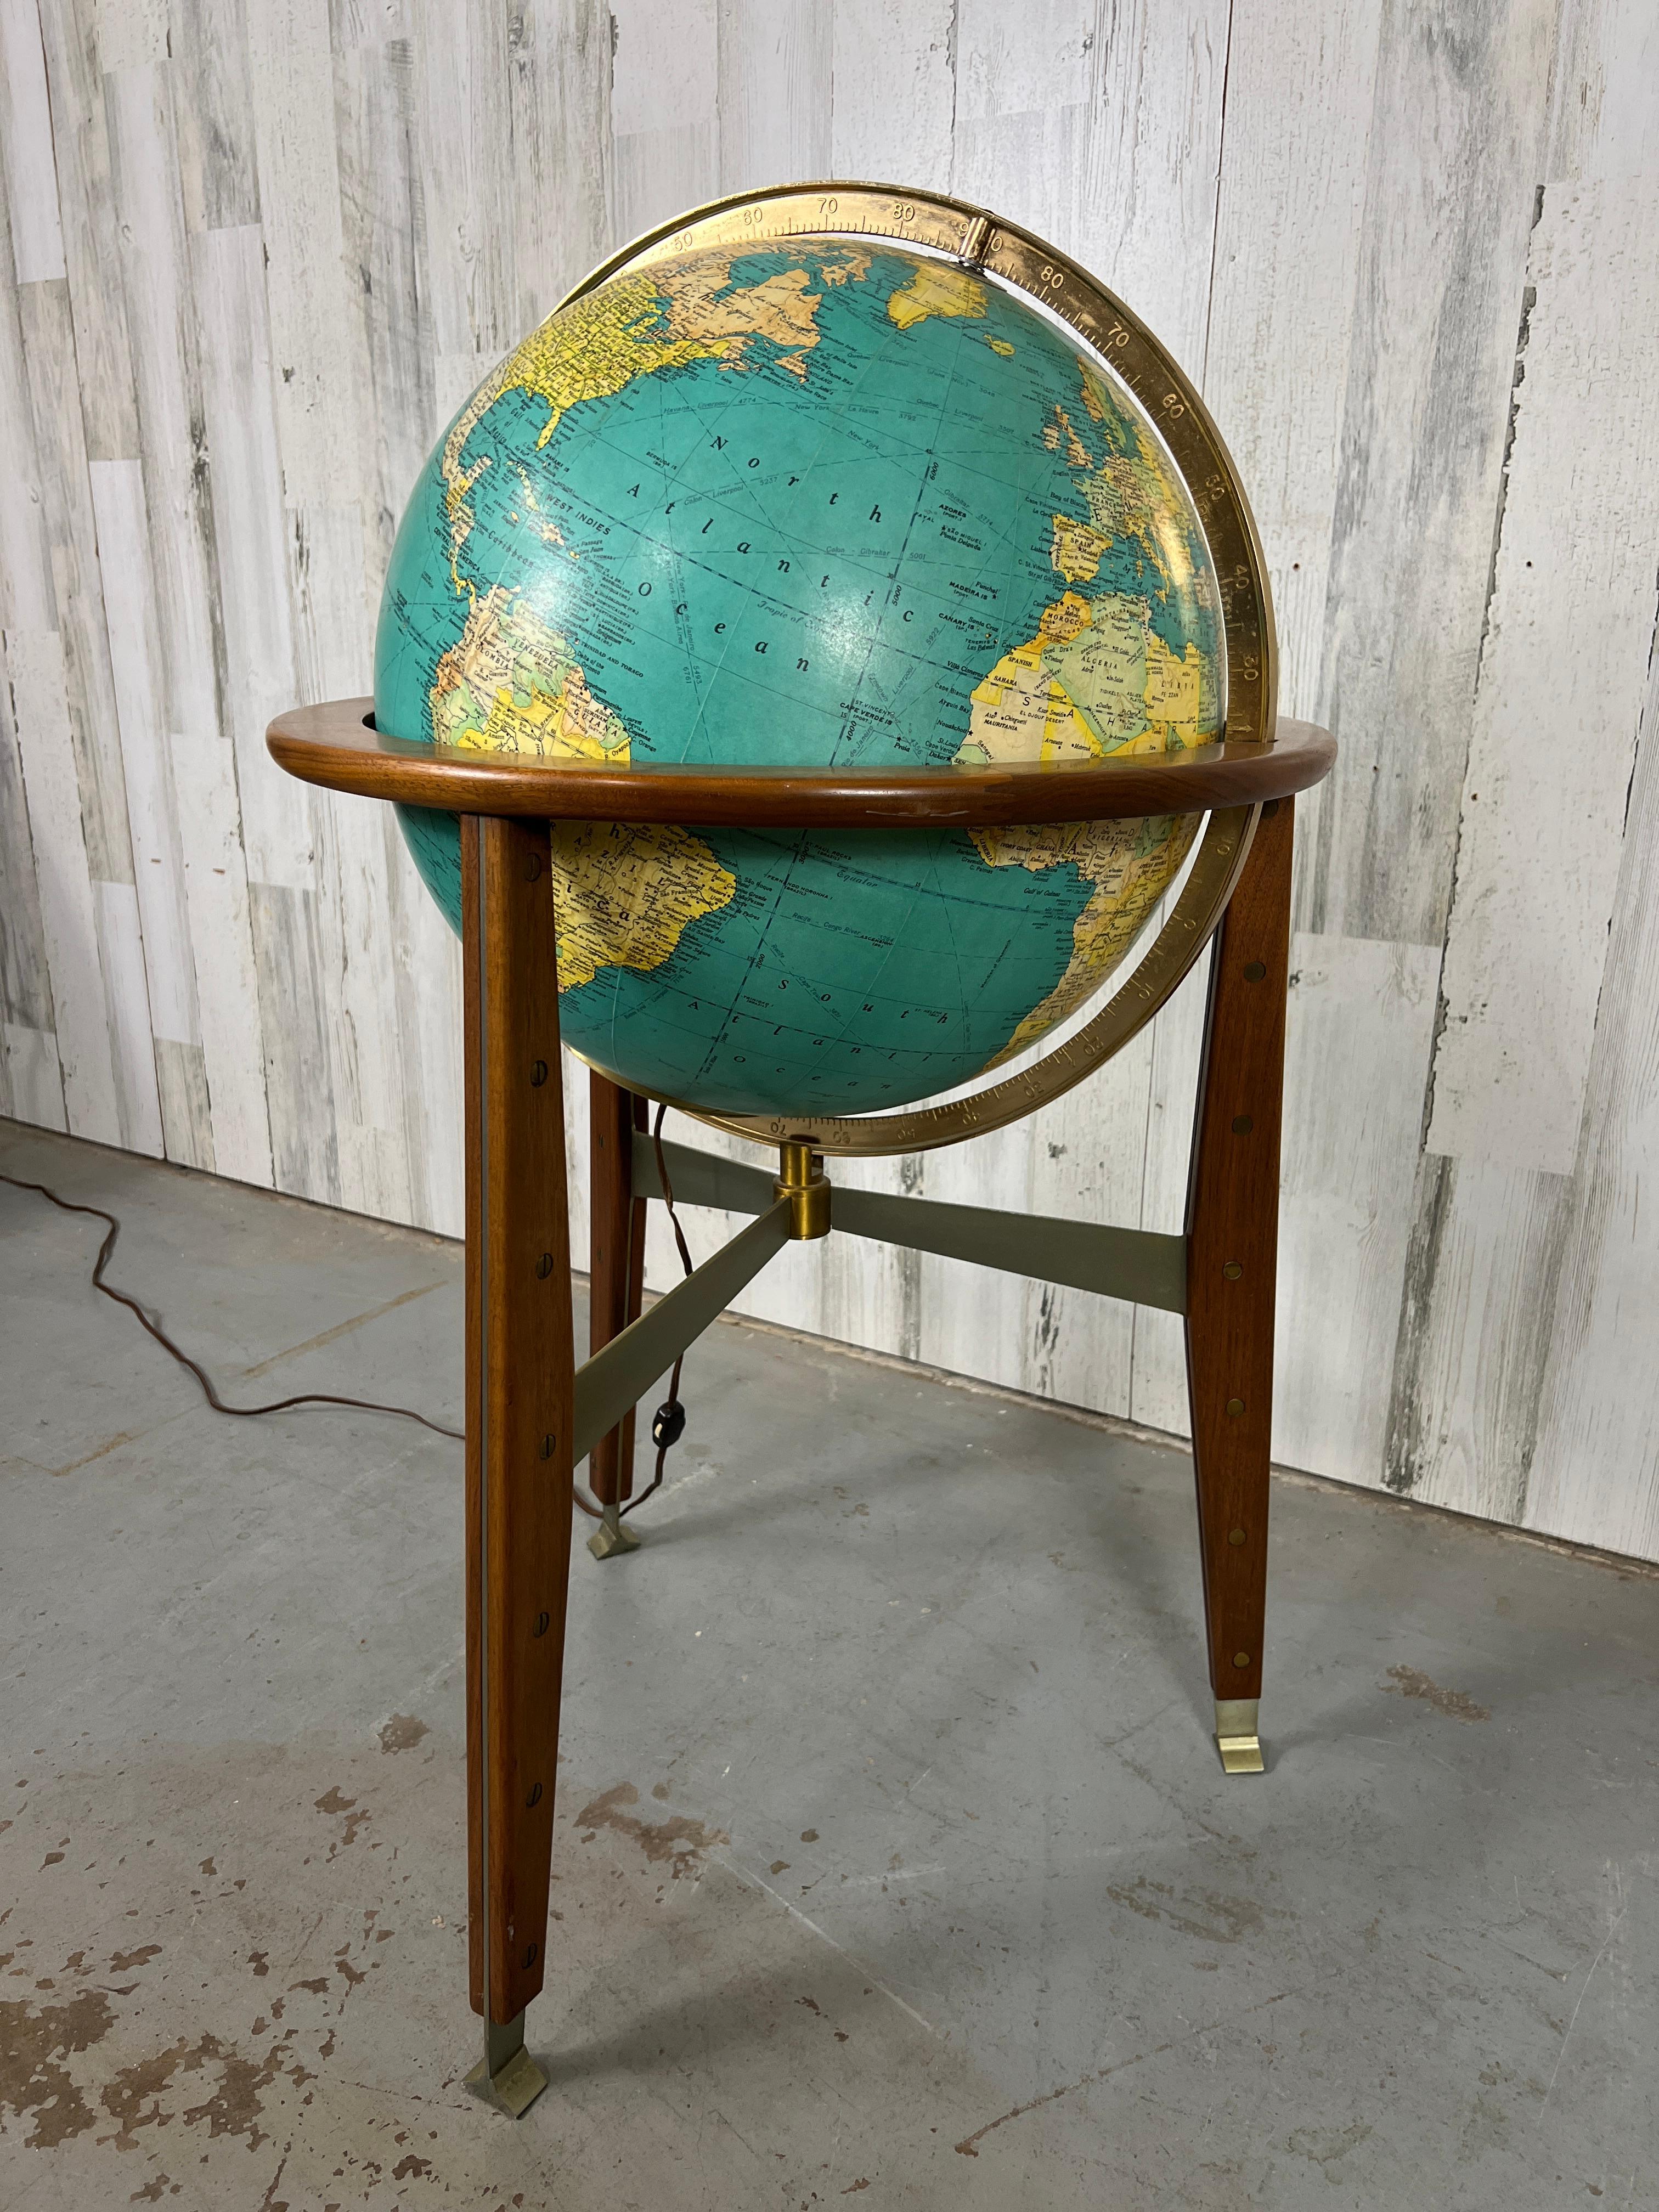 Stainless Steel Illuminated World Globe attributed to Edward Wormley